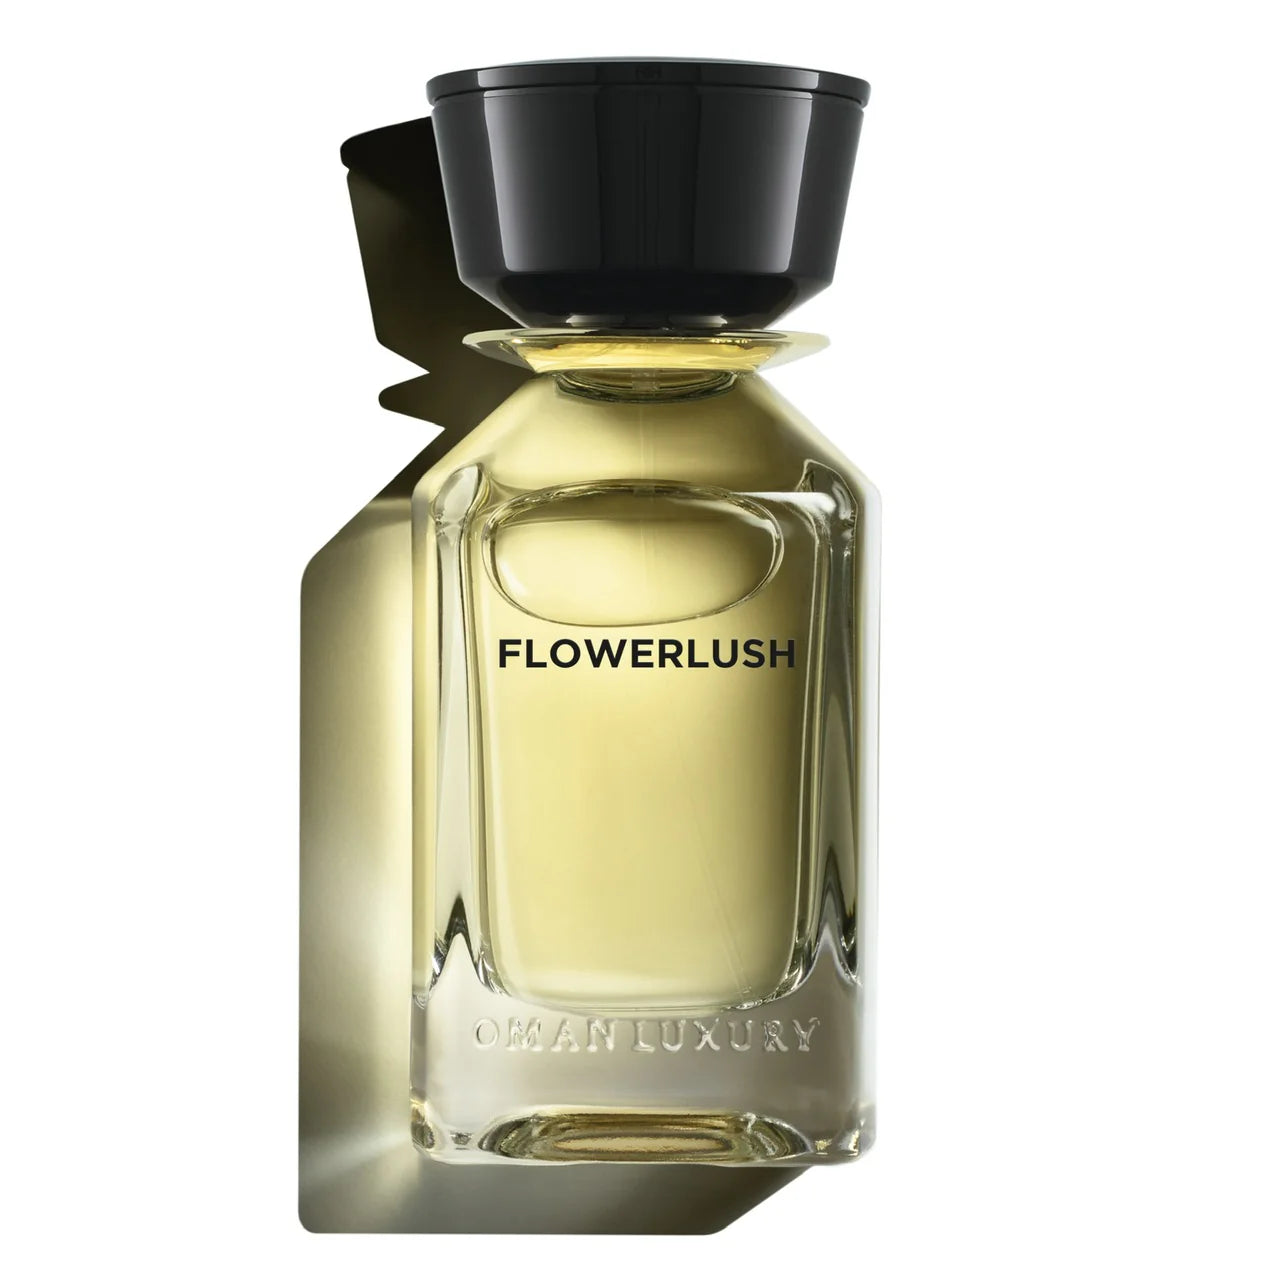 Flowerlush Oman Luxury 100ml